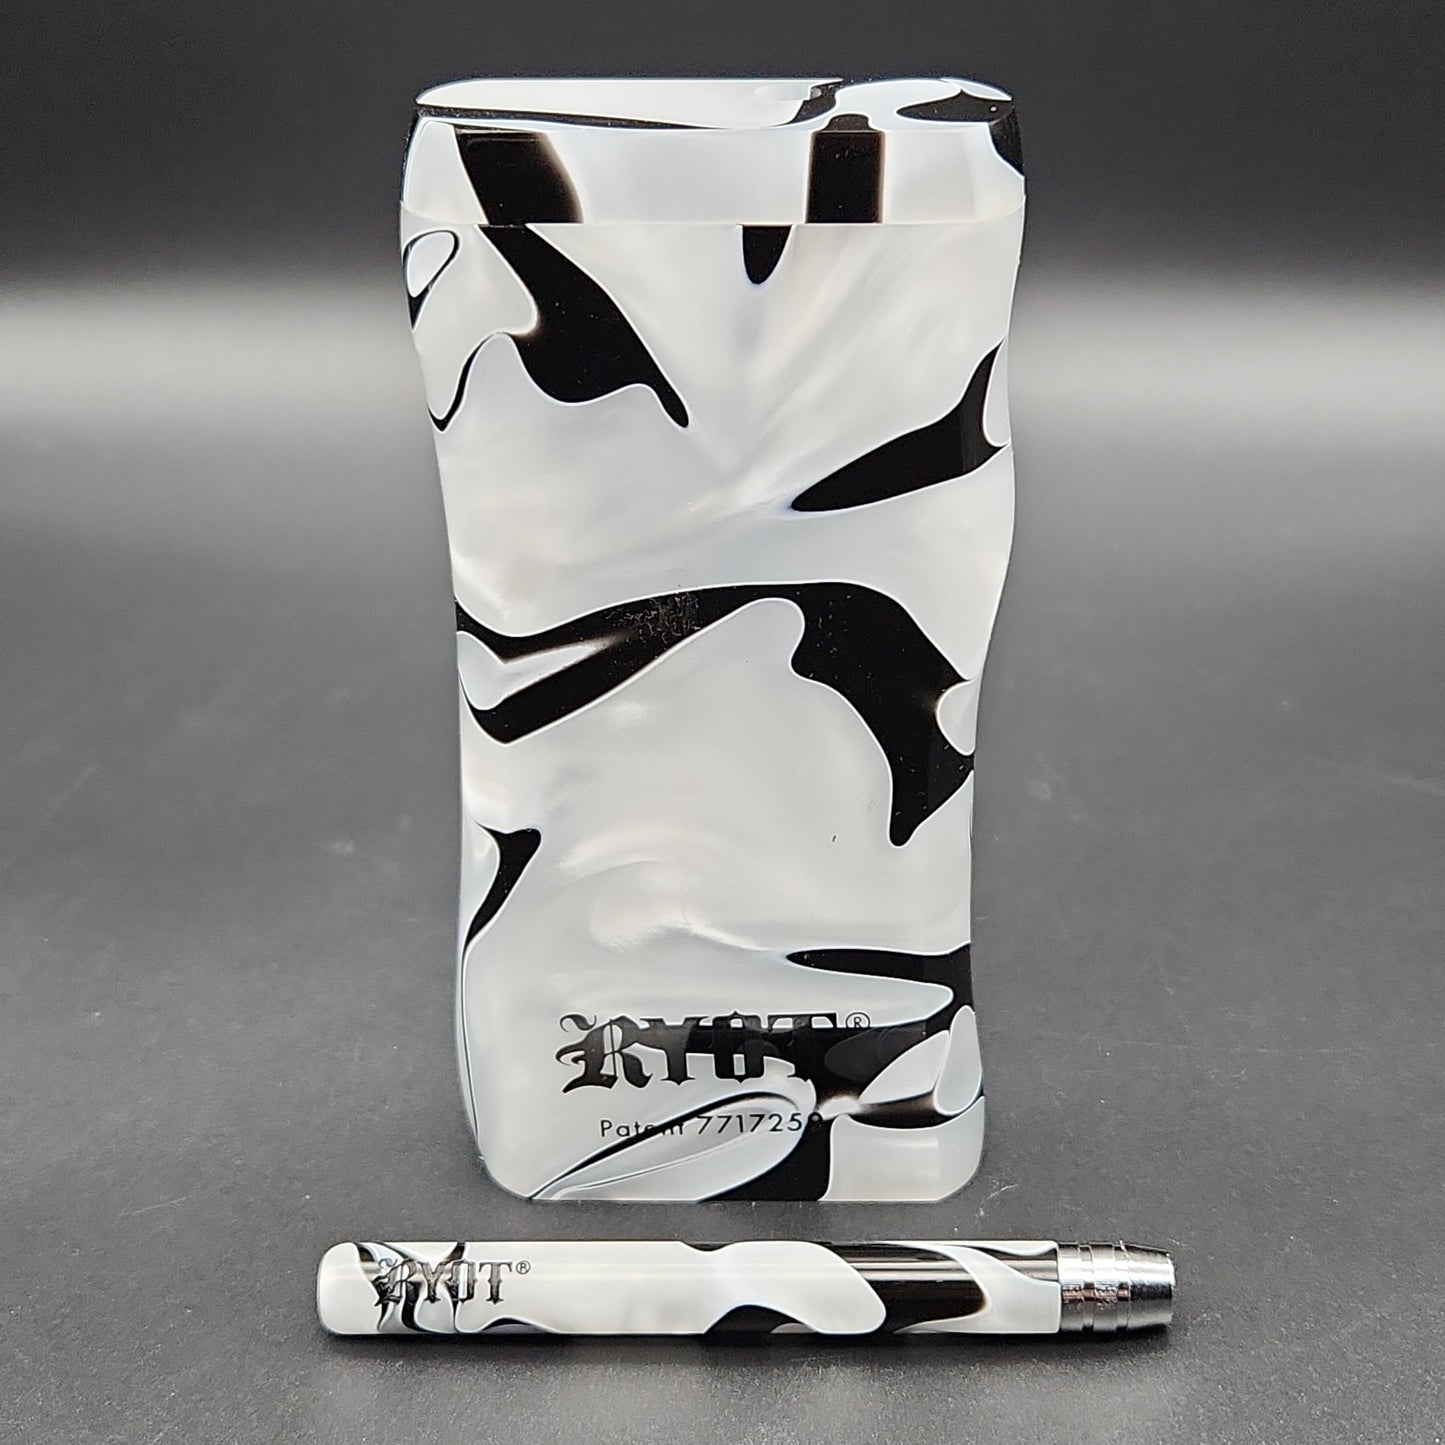 RYOT Acrylic Magnetic Taster Box - 3" / Large white and black